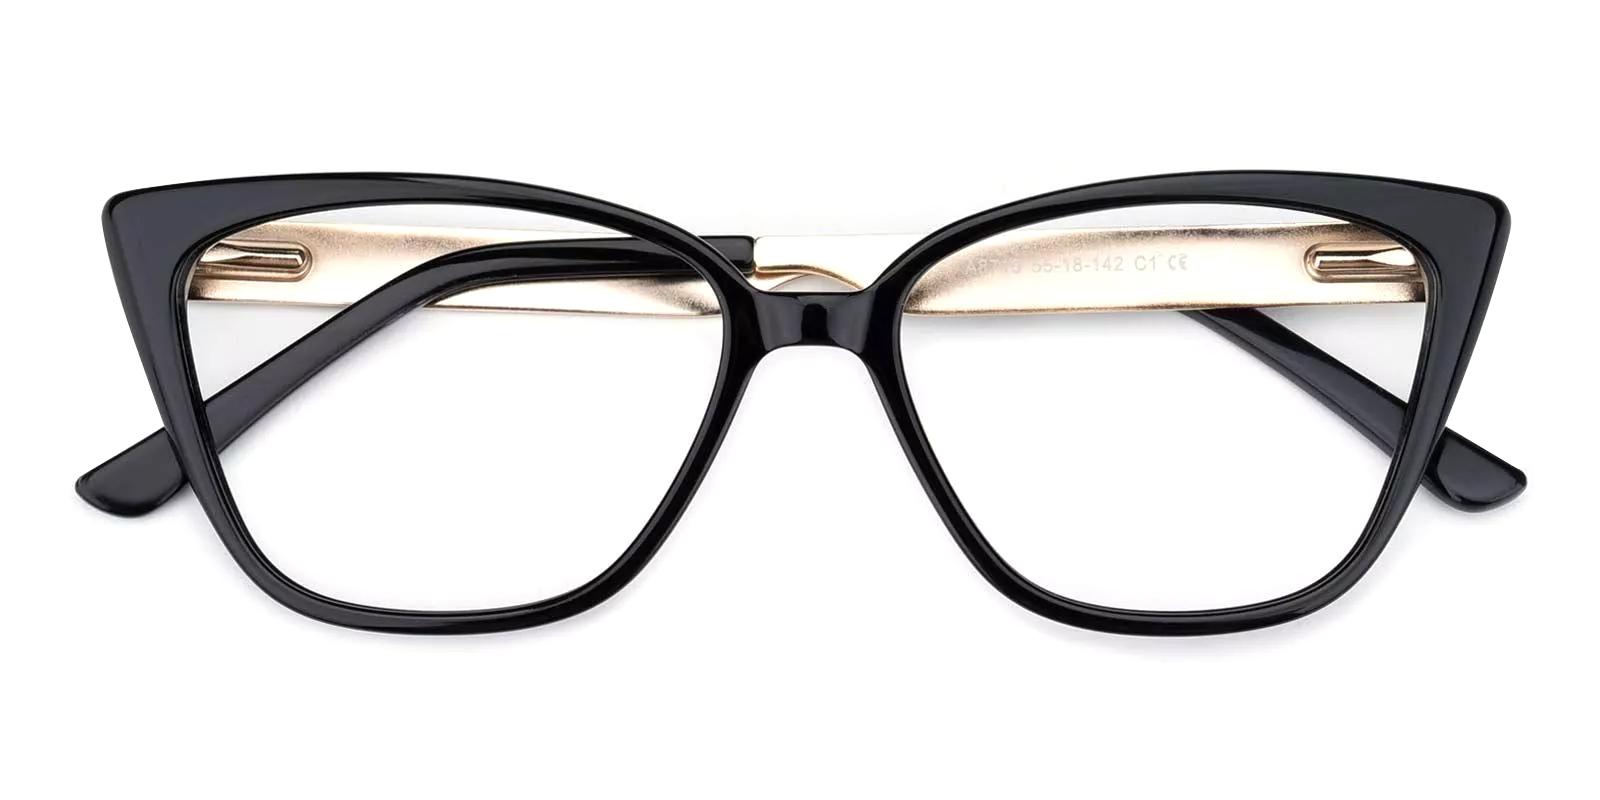 Fari Black Acetate Eyeglasses , UniversalBridgeFit Frames from ABBE Glasses